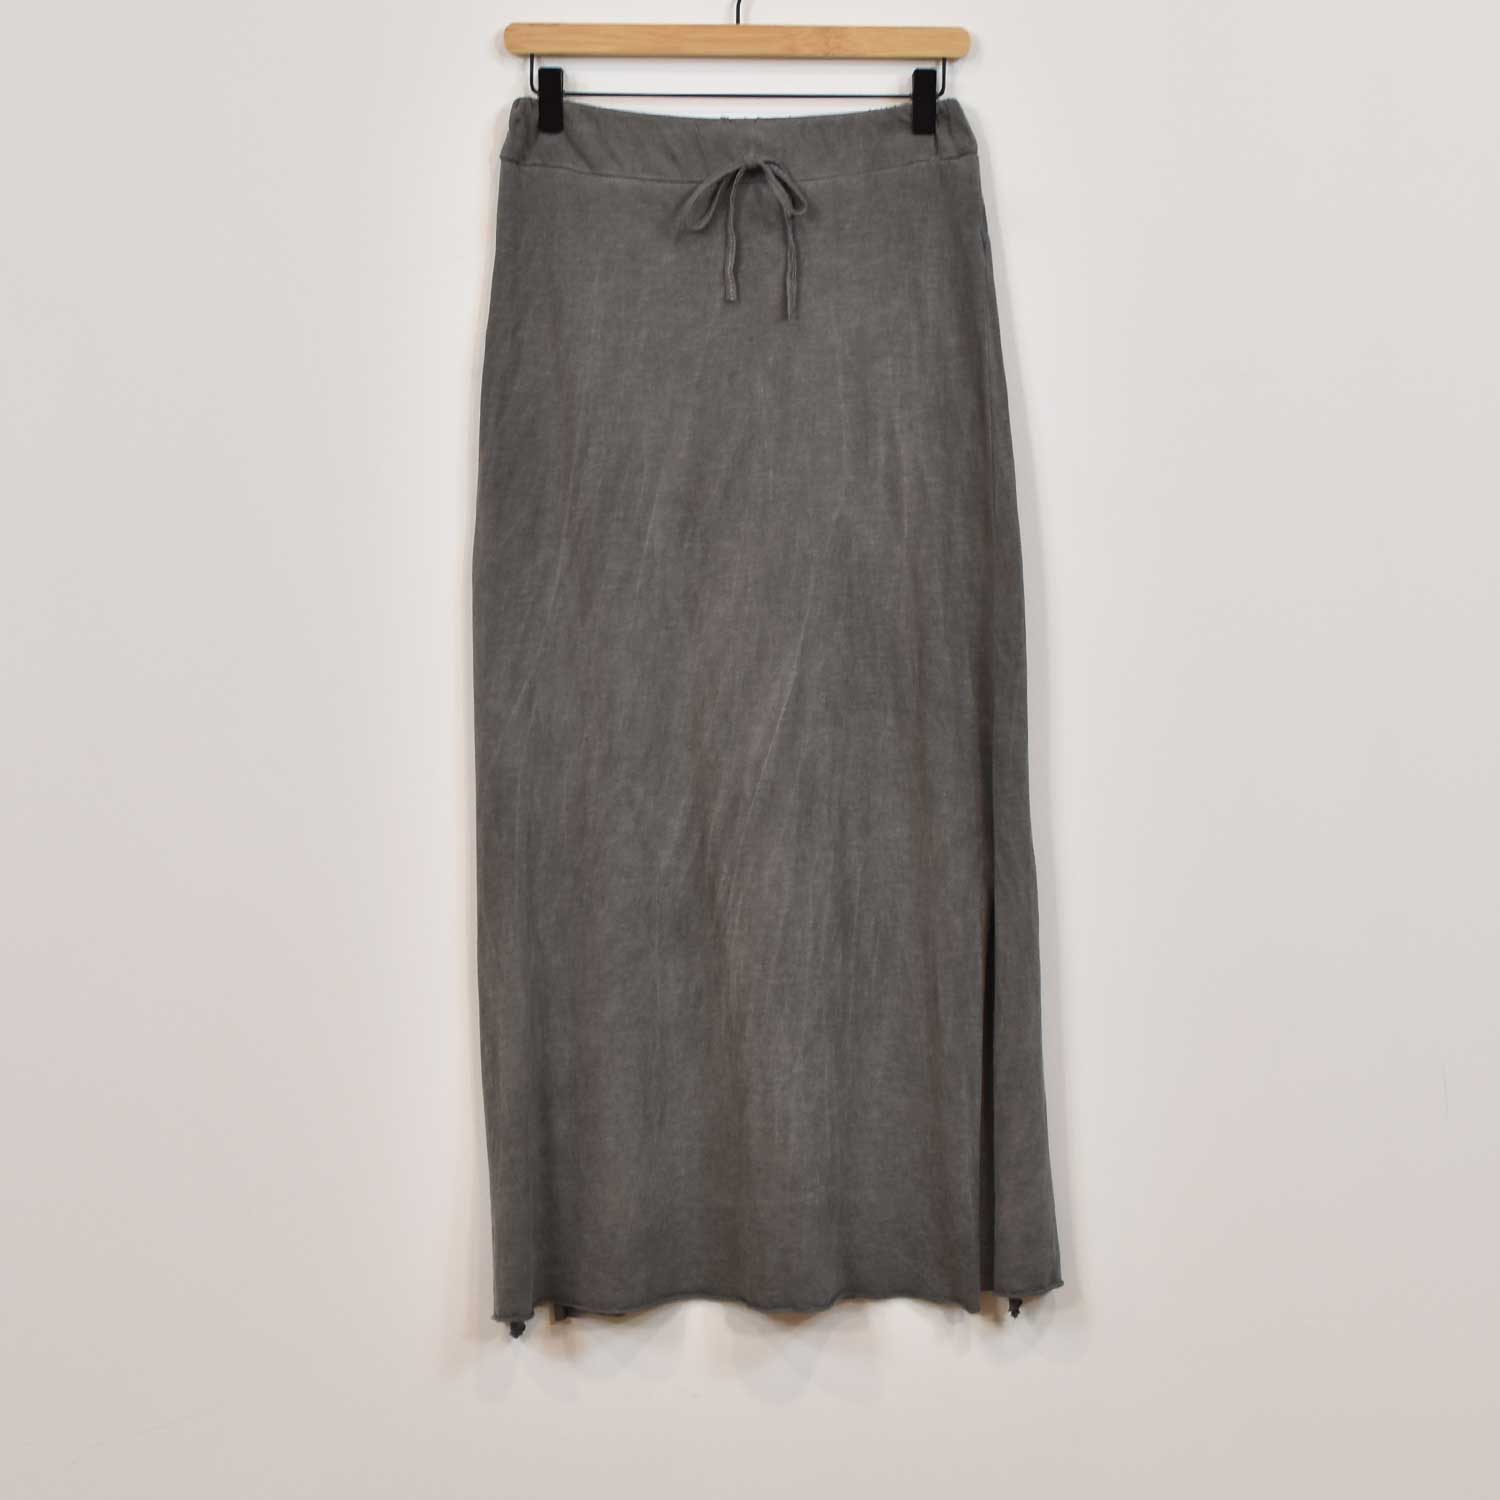 Grey cotton skirt